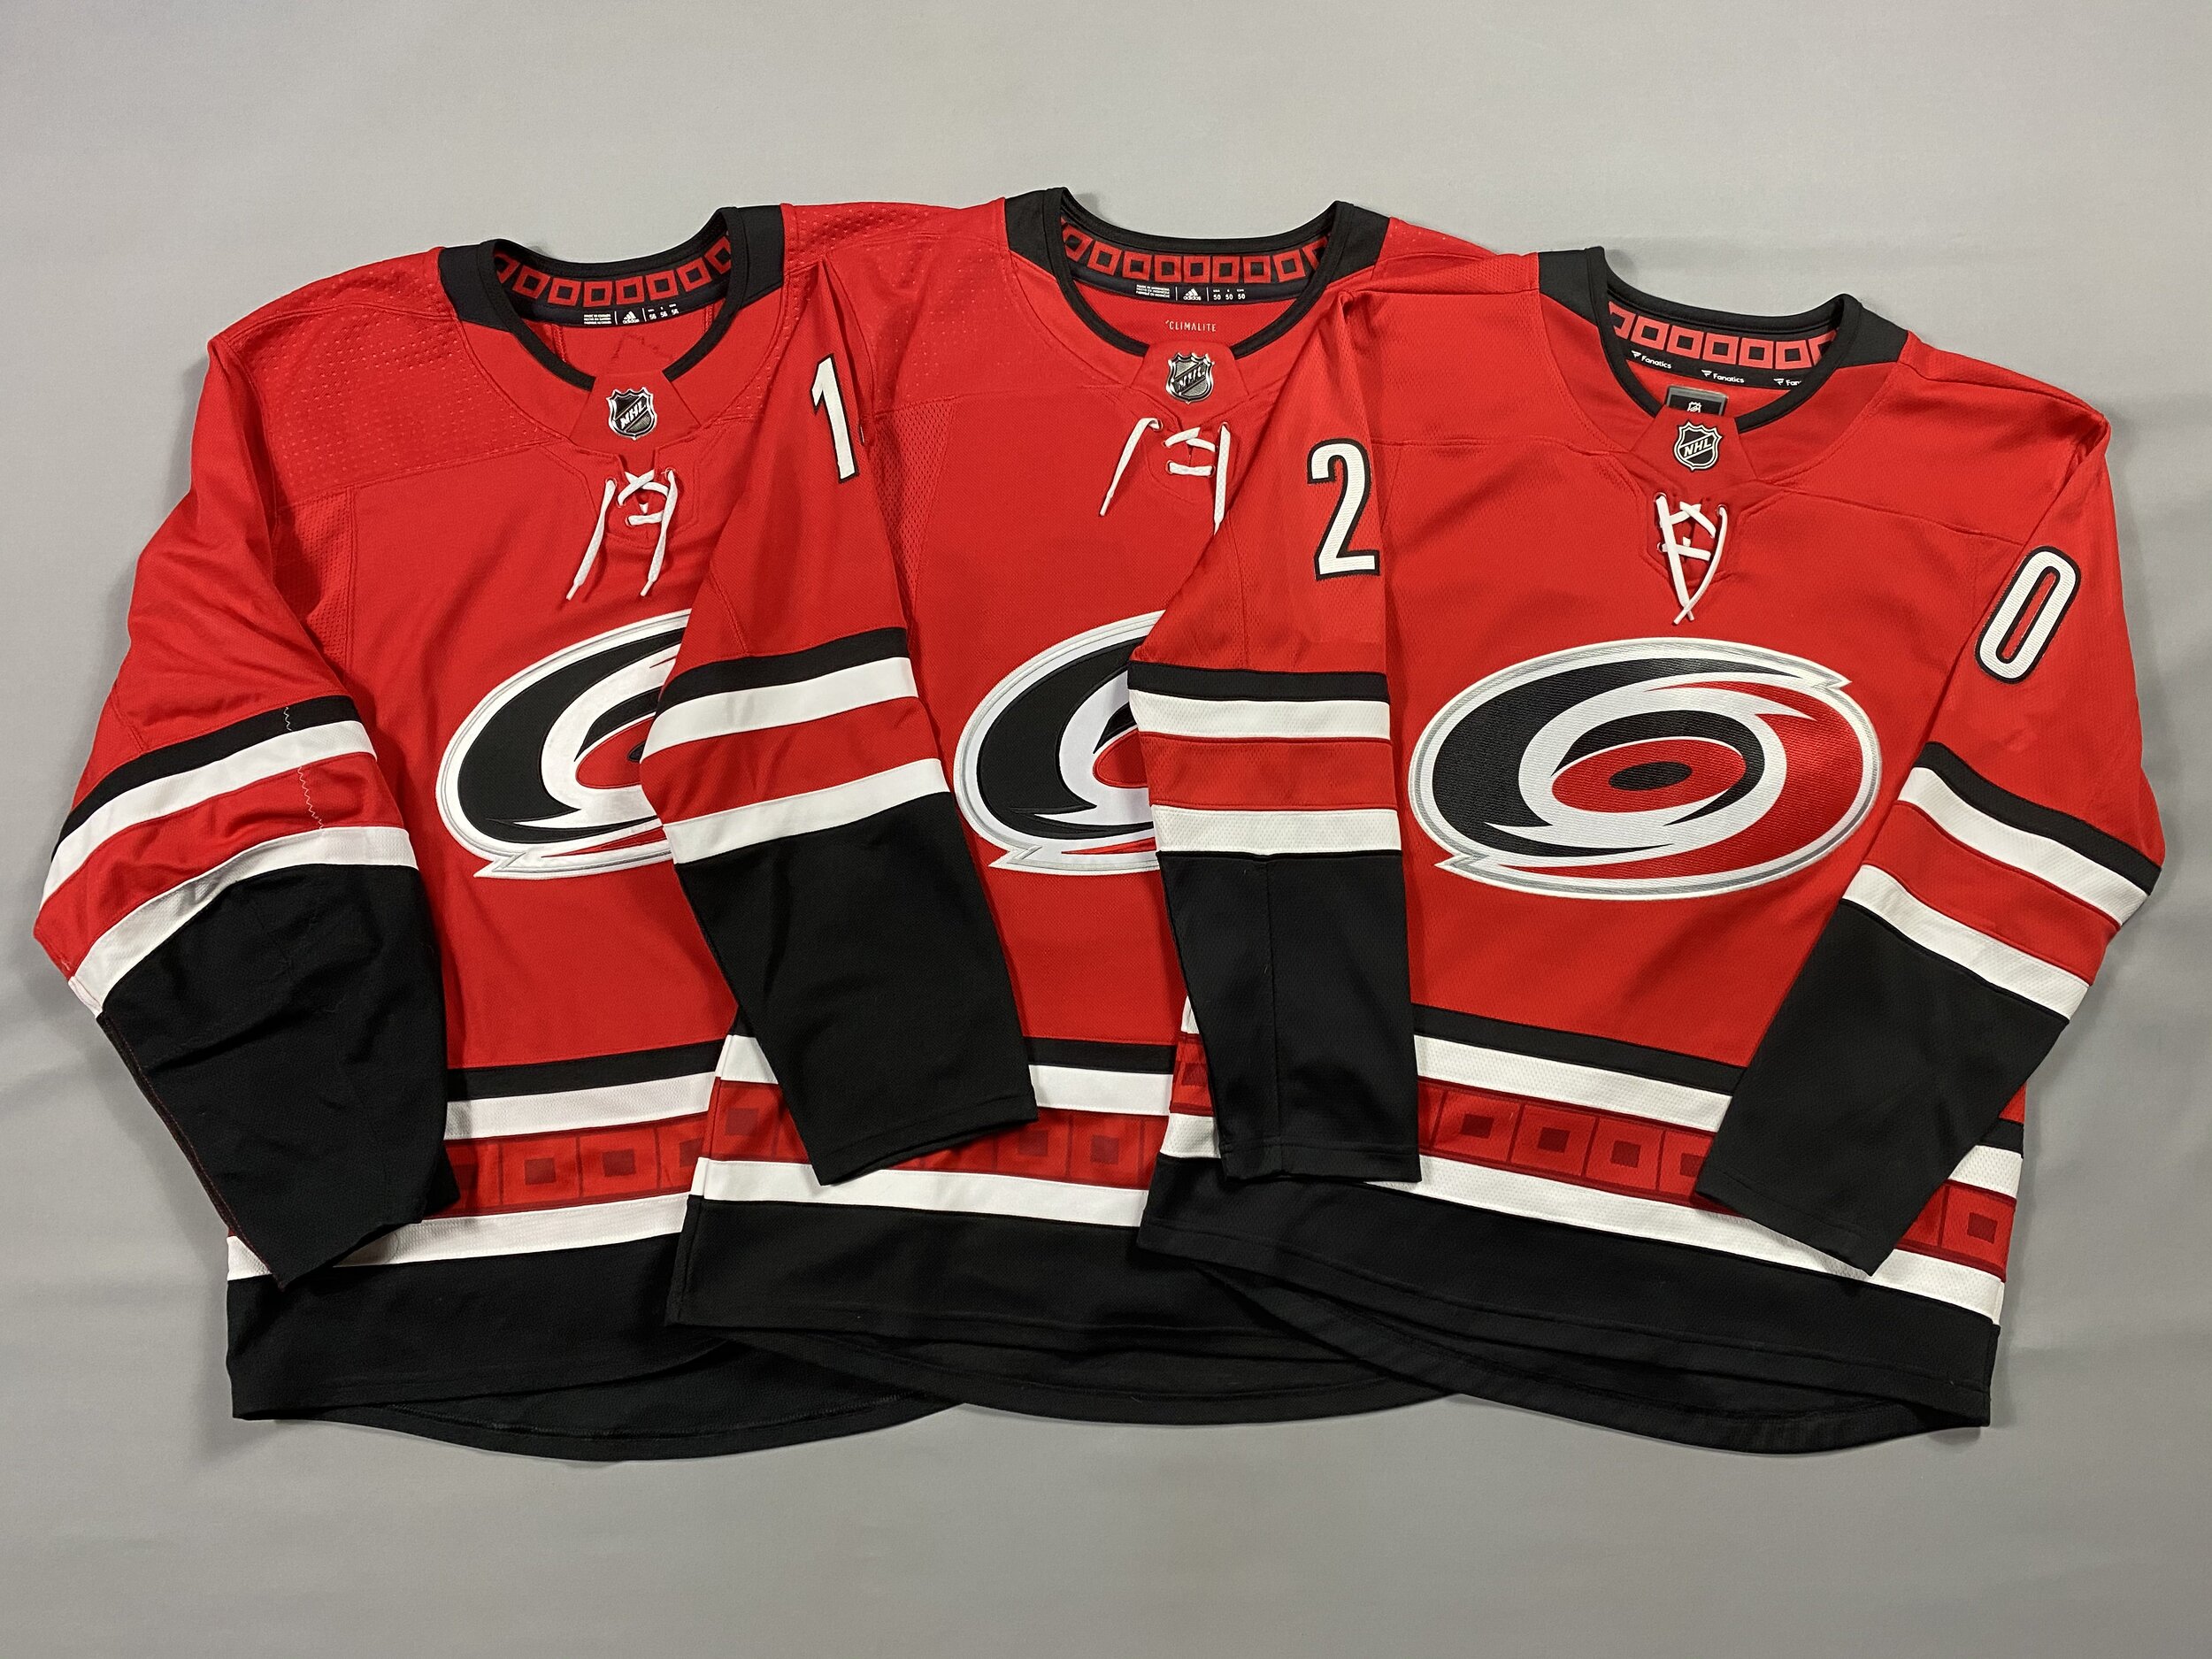 Fanatics to supply NHL uniforms, replacing Adidas